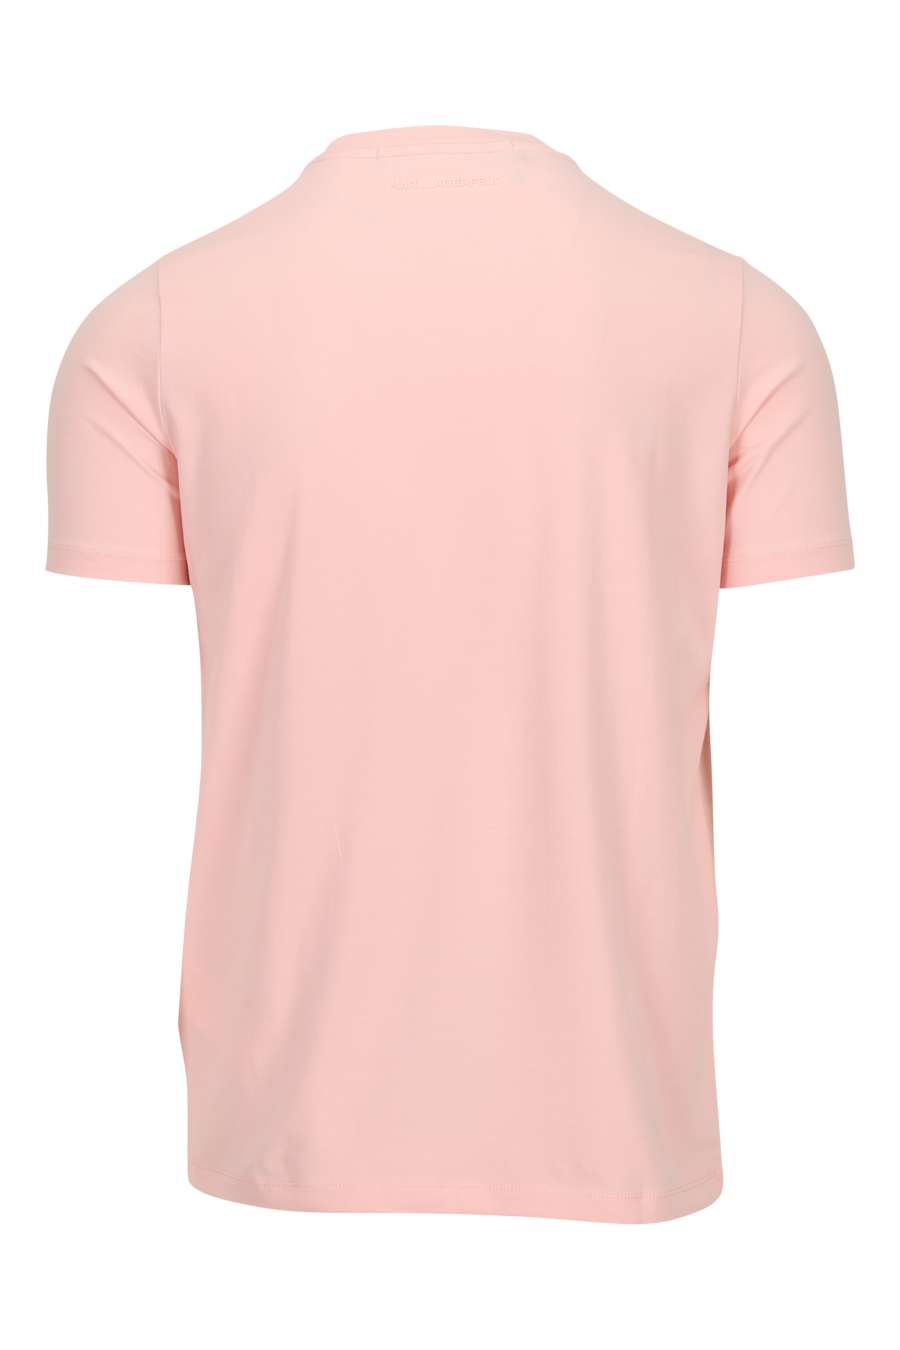 Camiseta rosa con minilogo "karl" en goma - 4062226954594 1